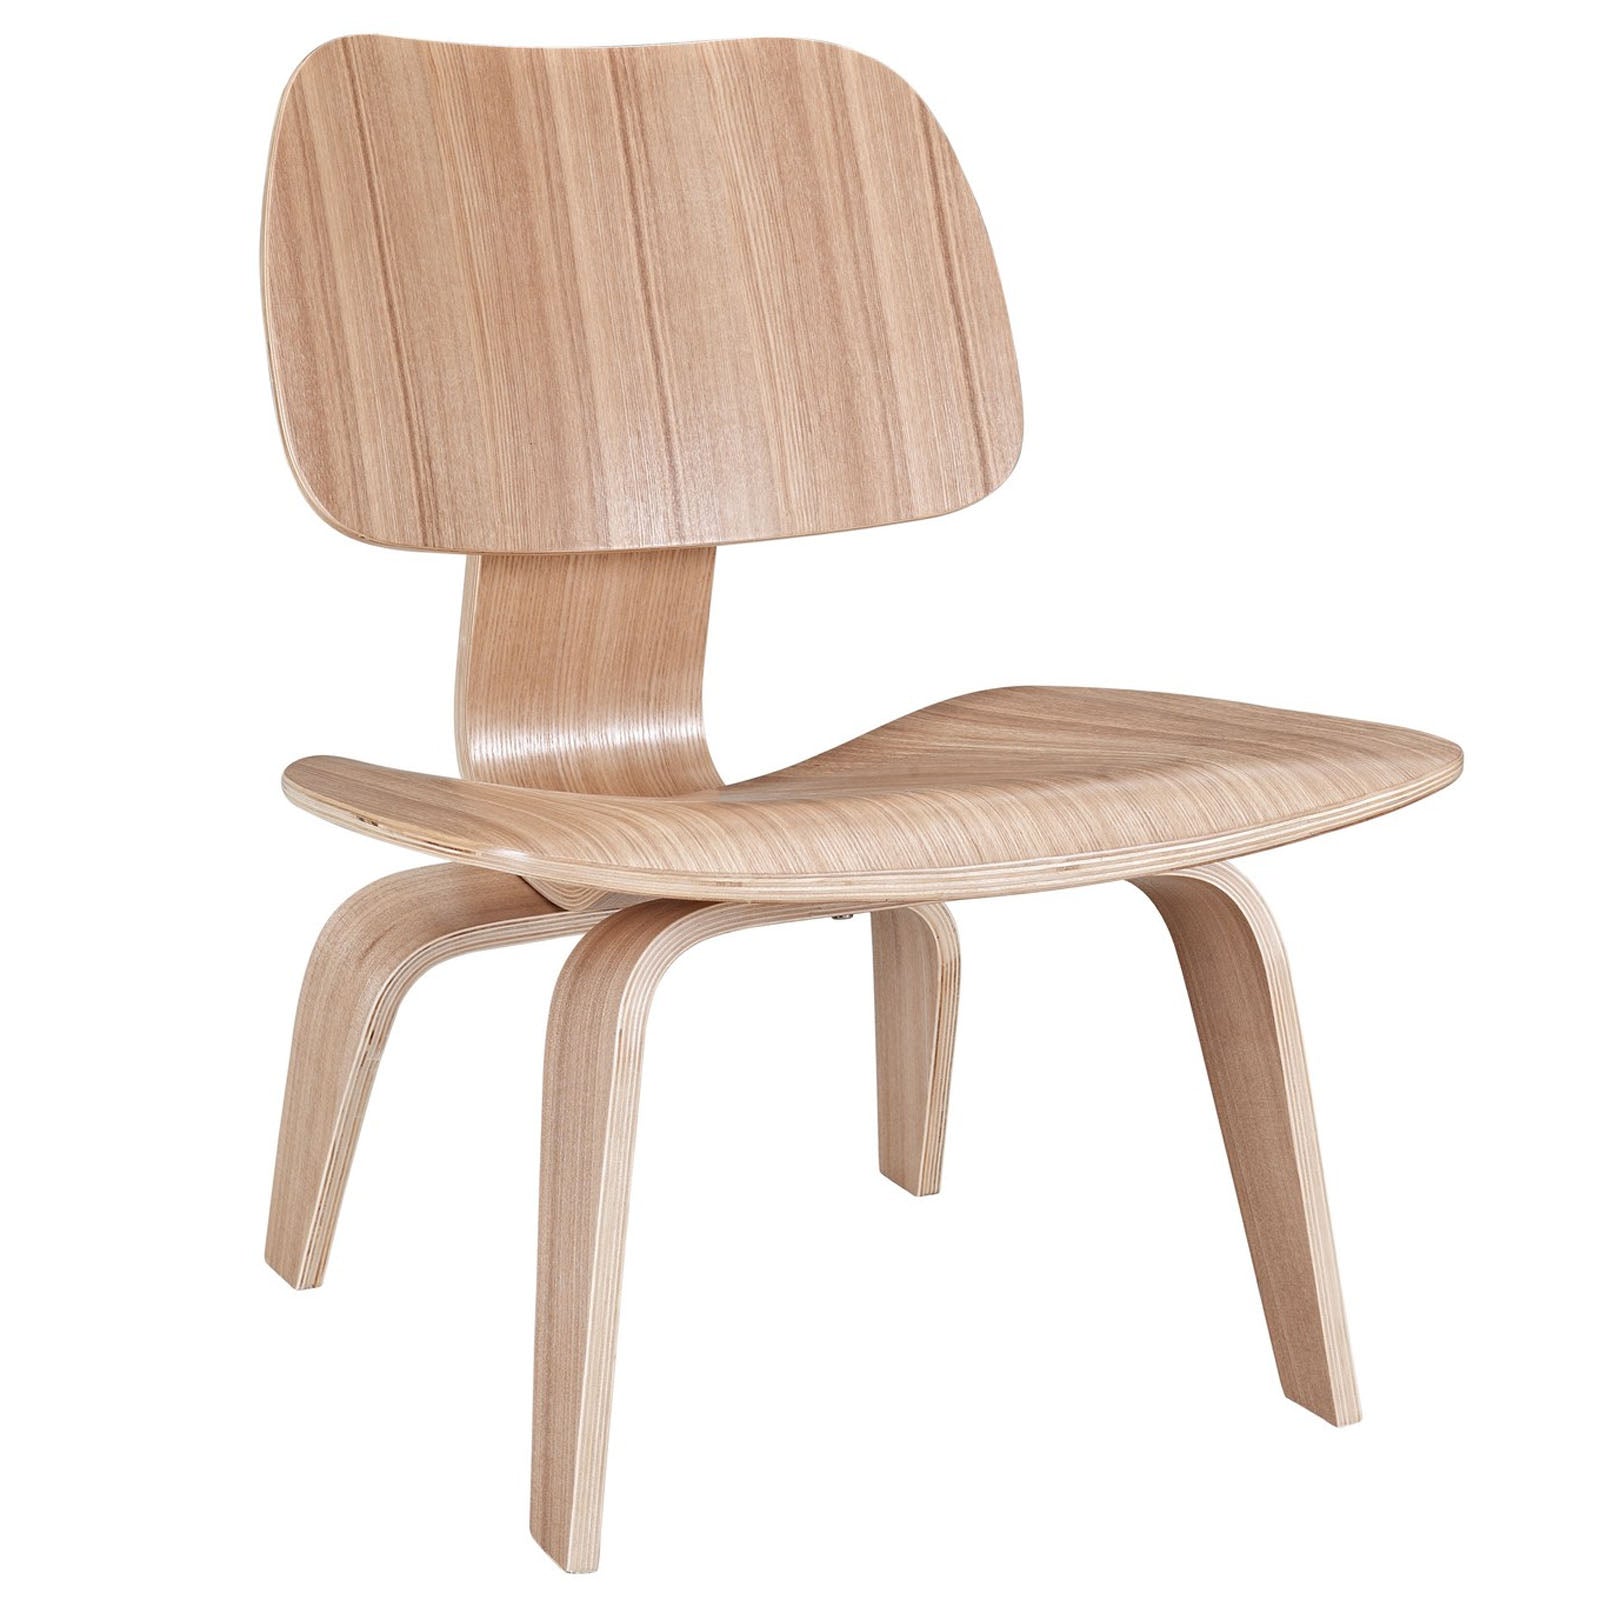 Fathom Wood Lounge Chair - East Shore Modern Home Furnishings